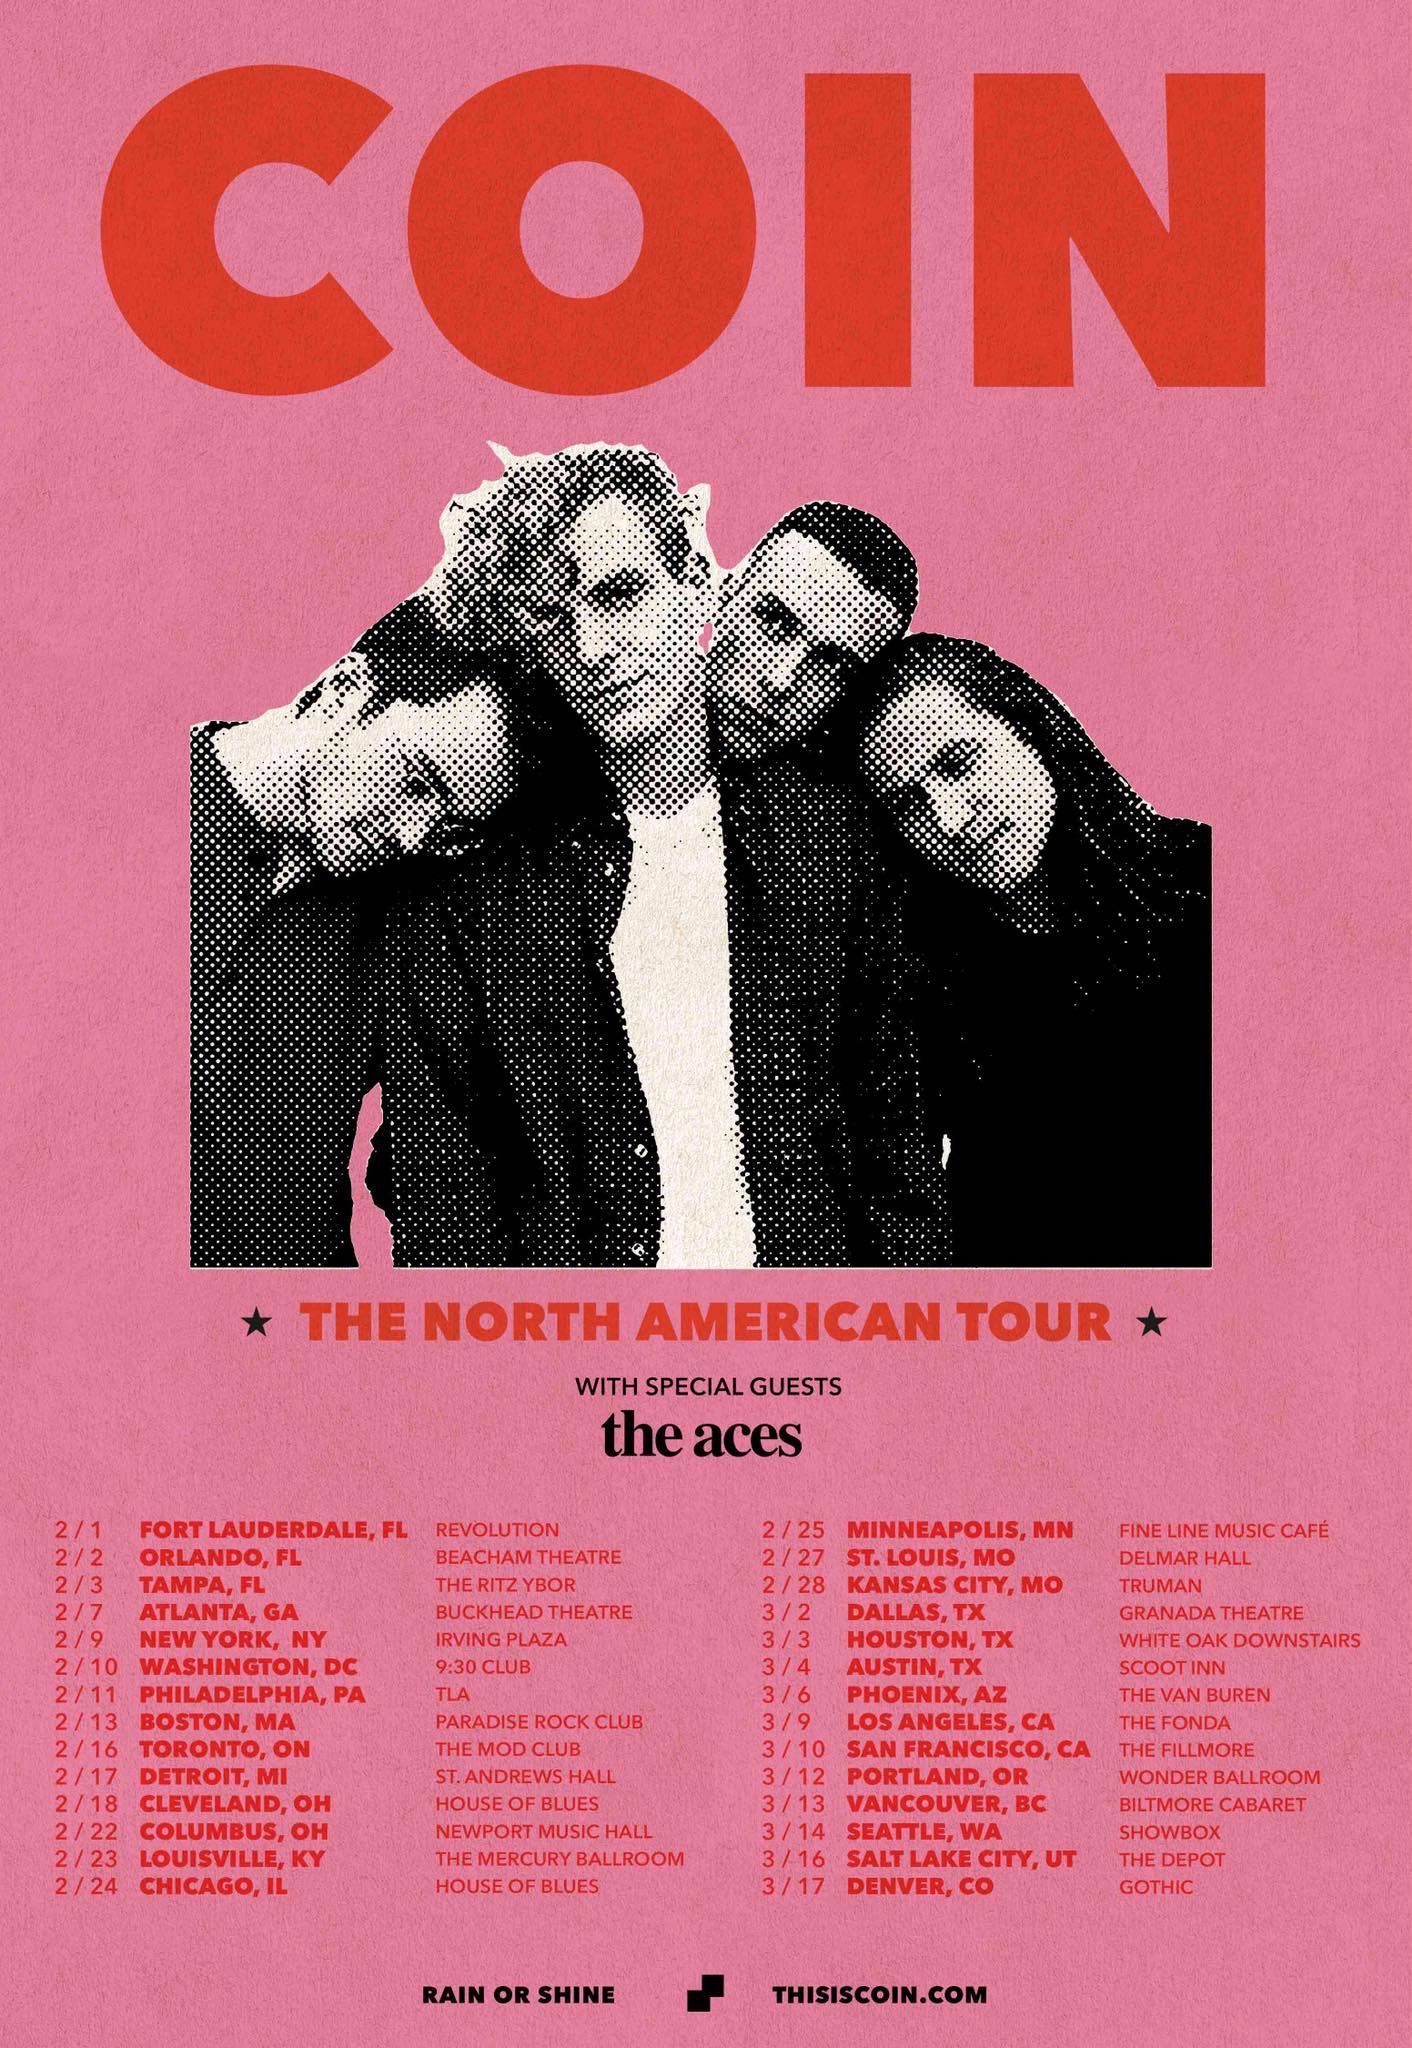 tour dates 2018. Rock band posters .com